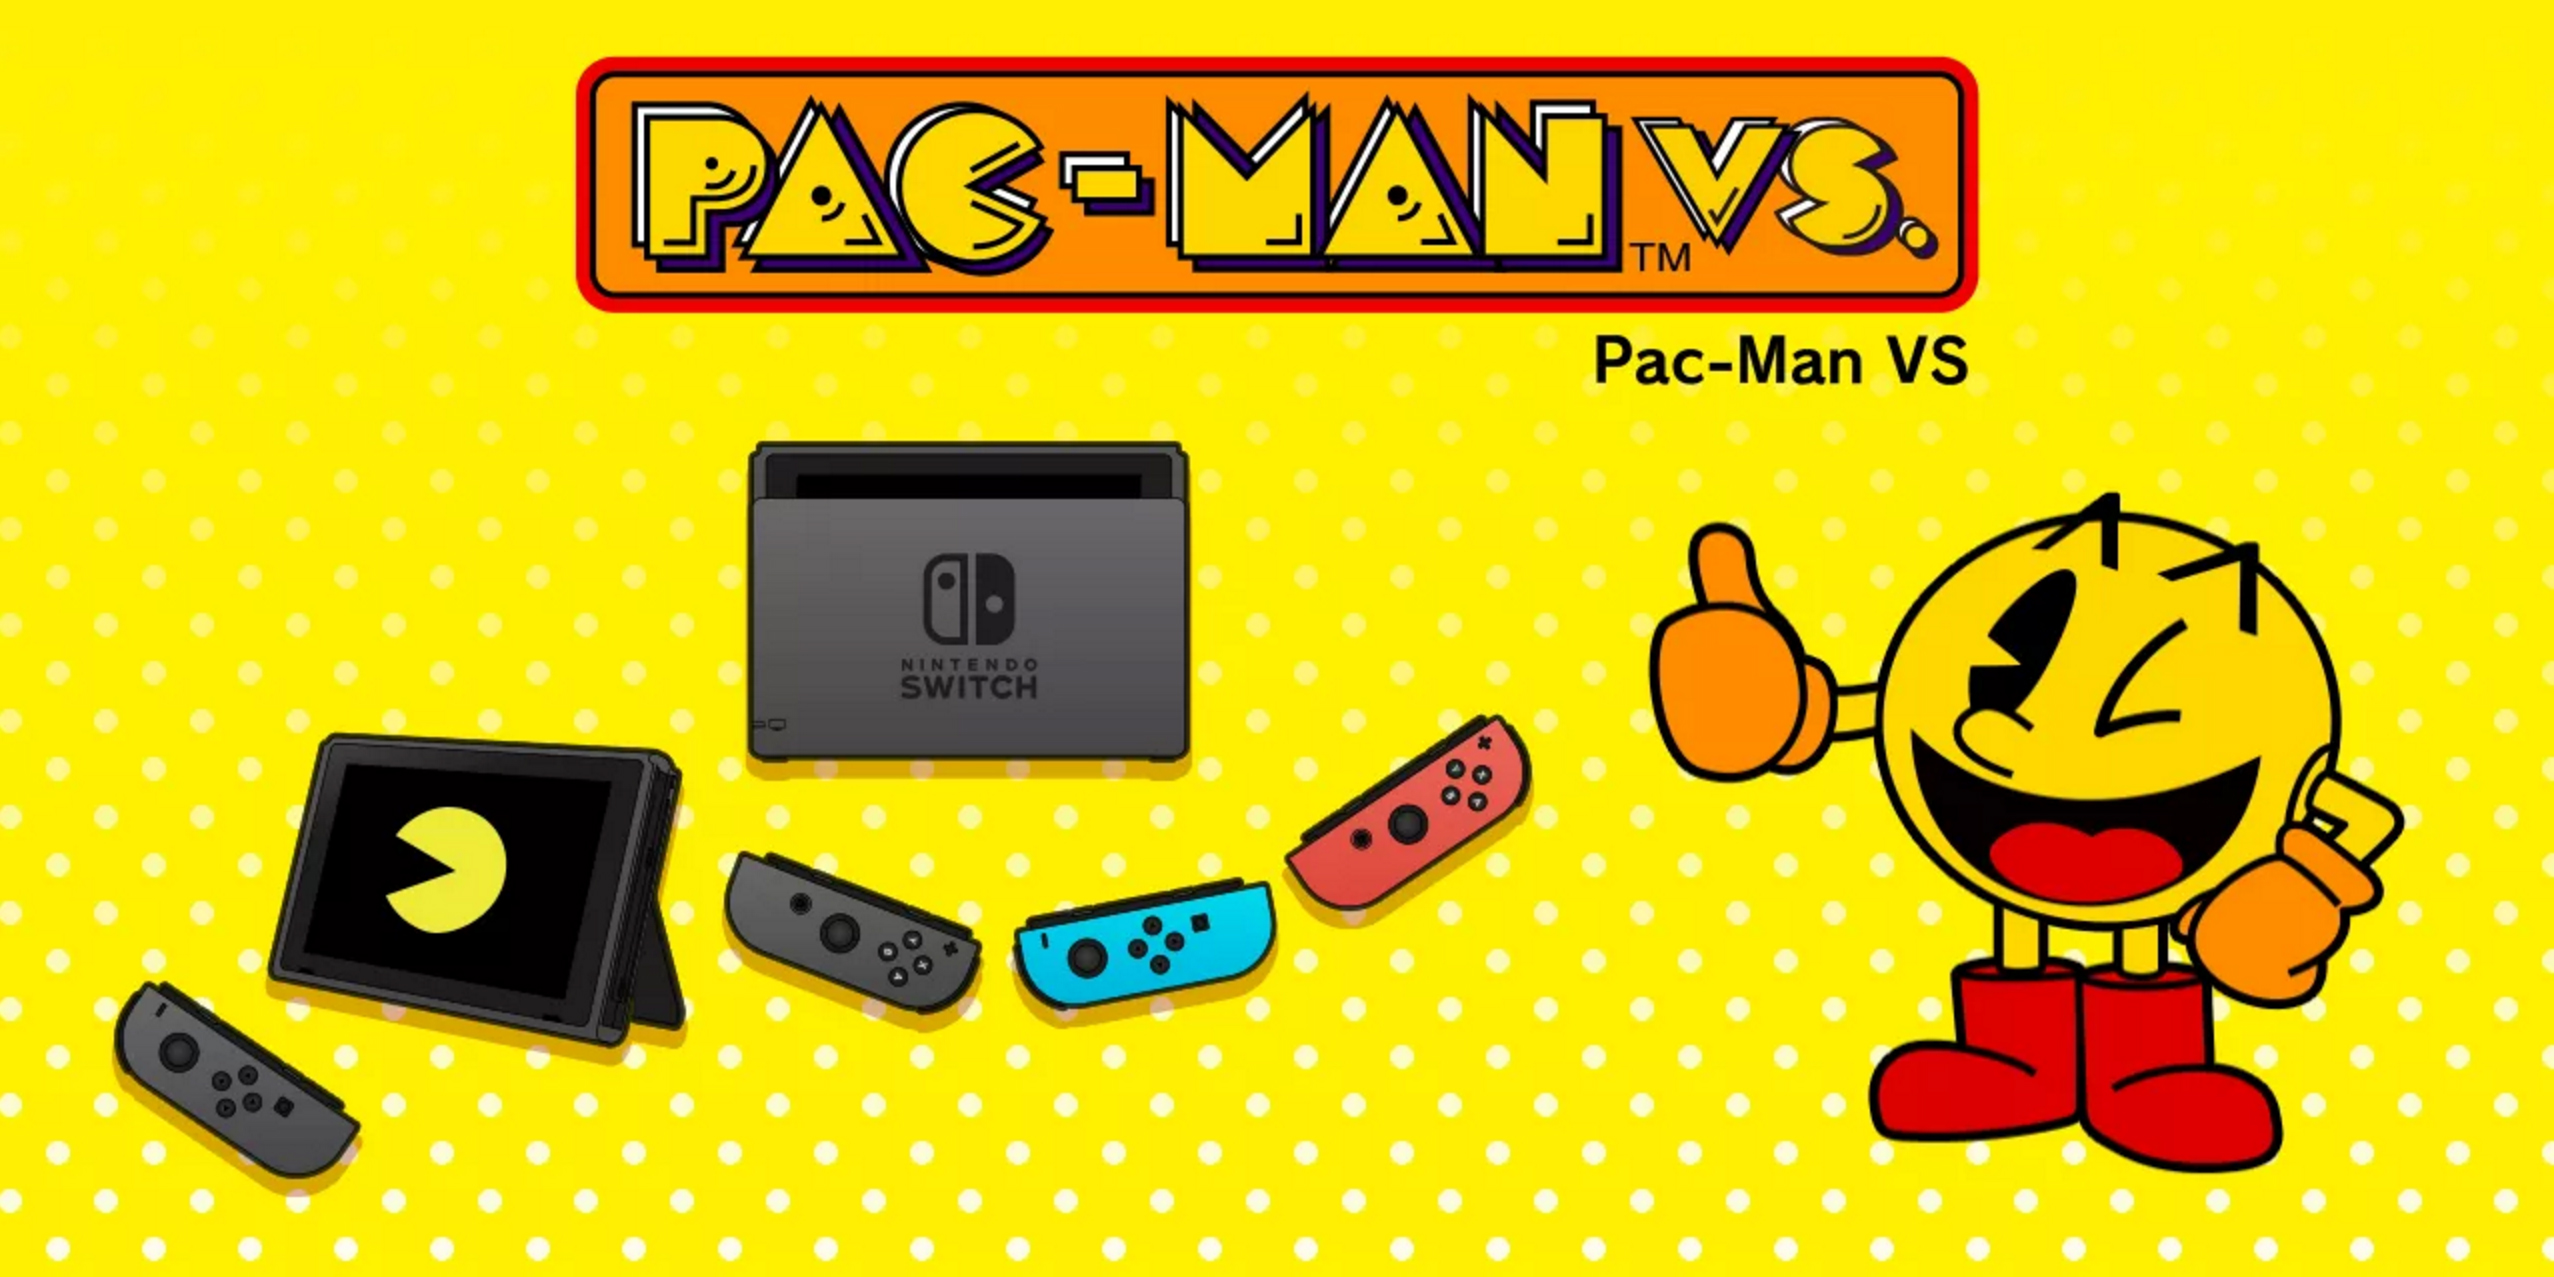  PAC-MAN MUSEUM + - Nintendo Switch : Bandai Namco Games Amer:  Video Games